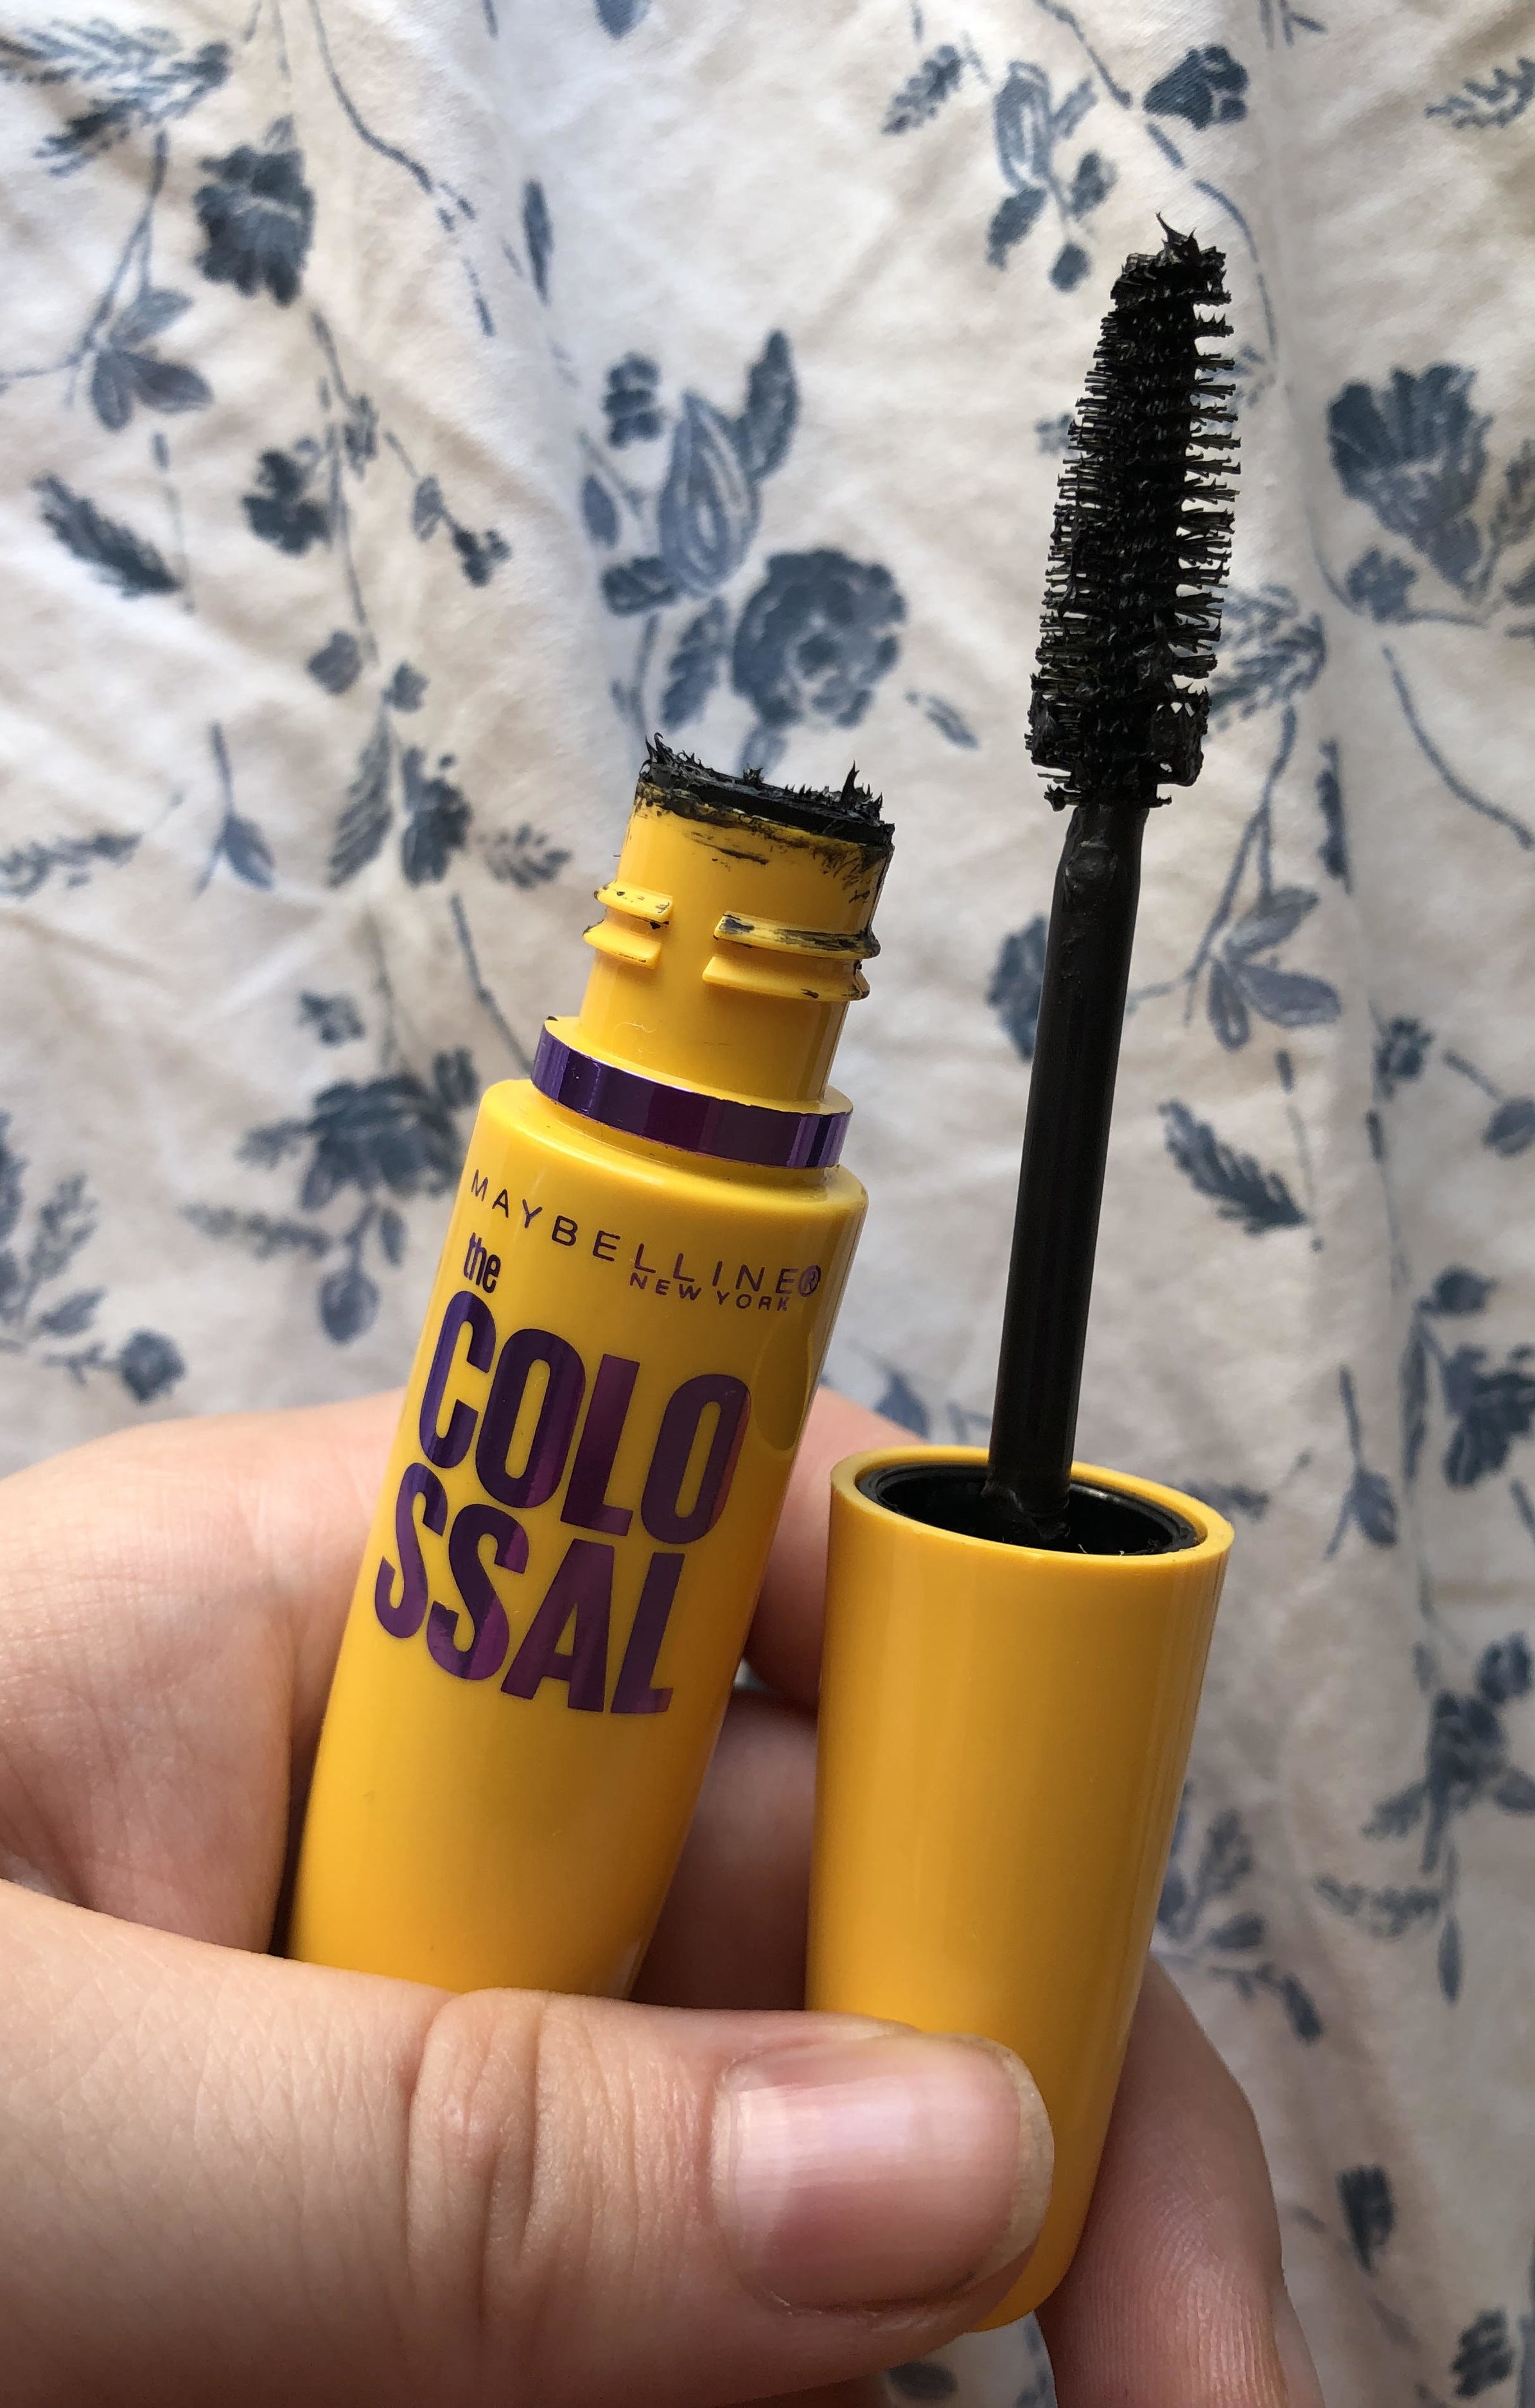 The Maybelline Colossal Mascara brush